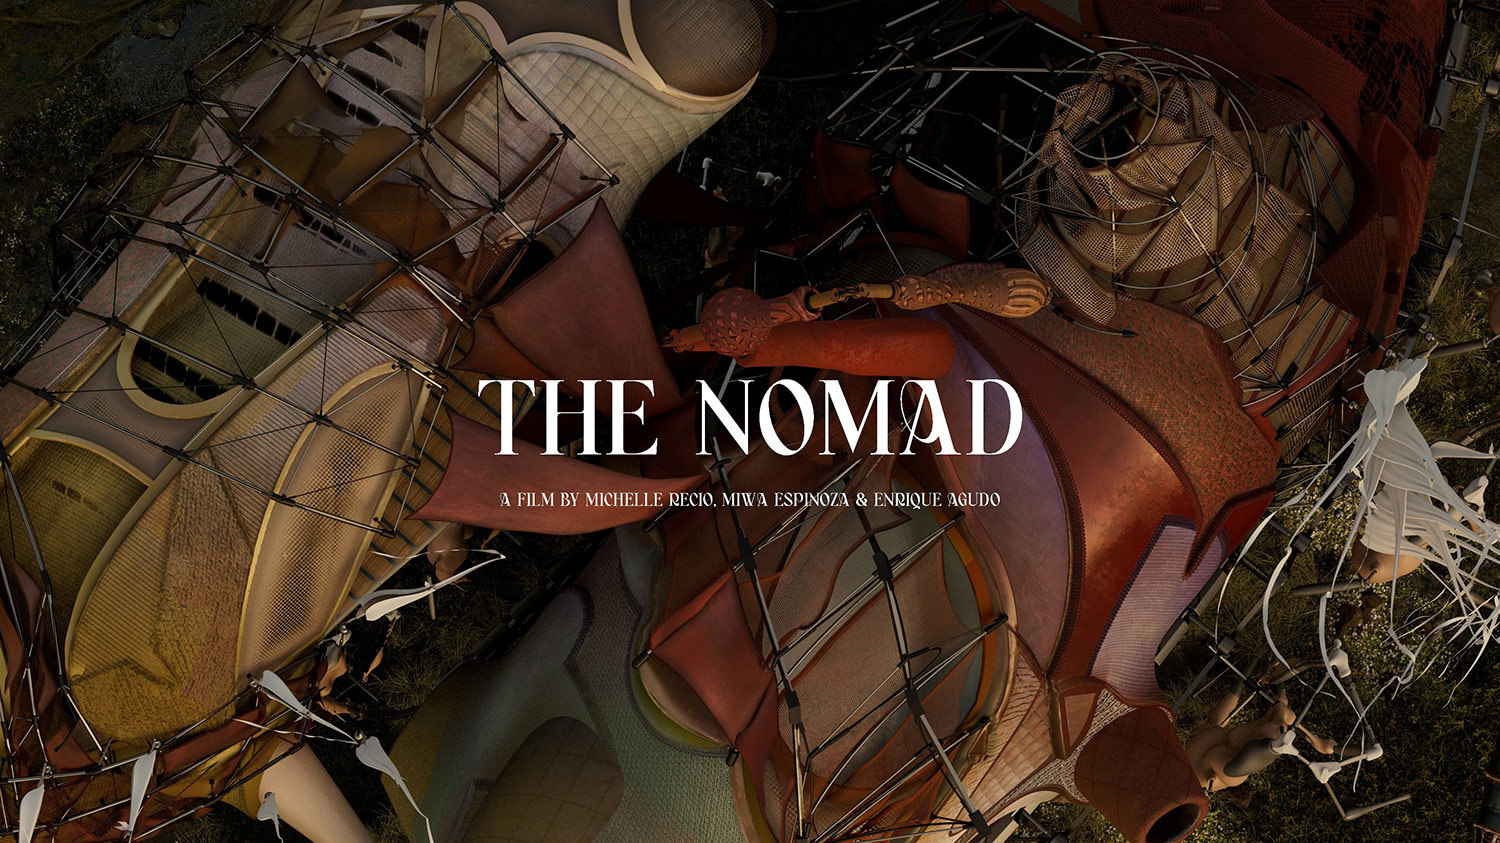 the nomad film still by Enrique Agudo